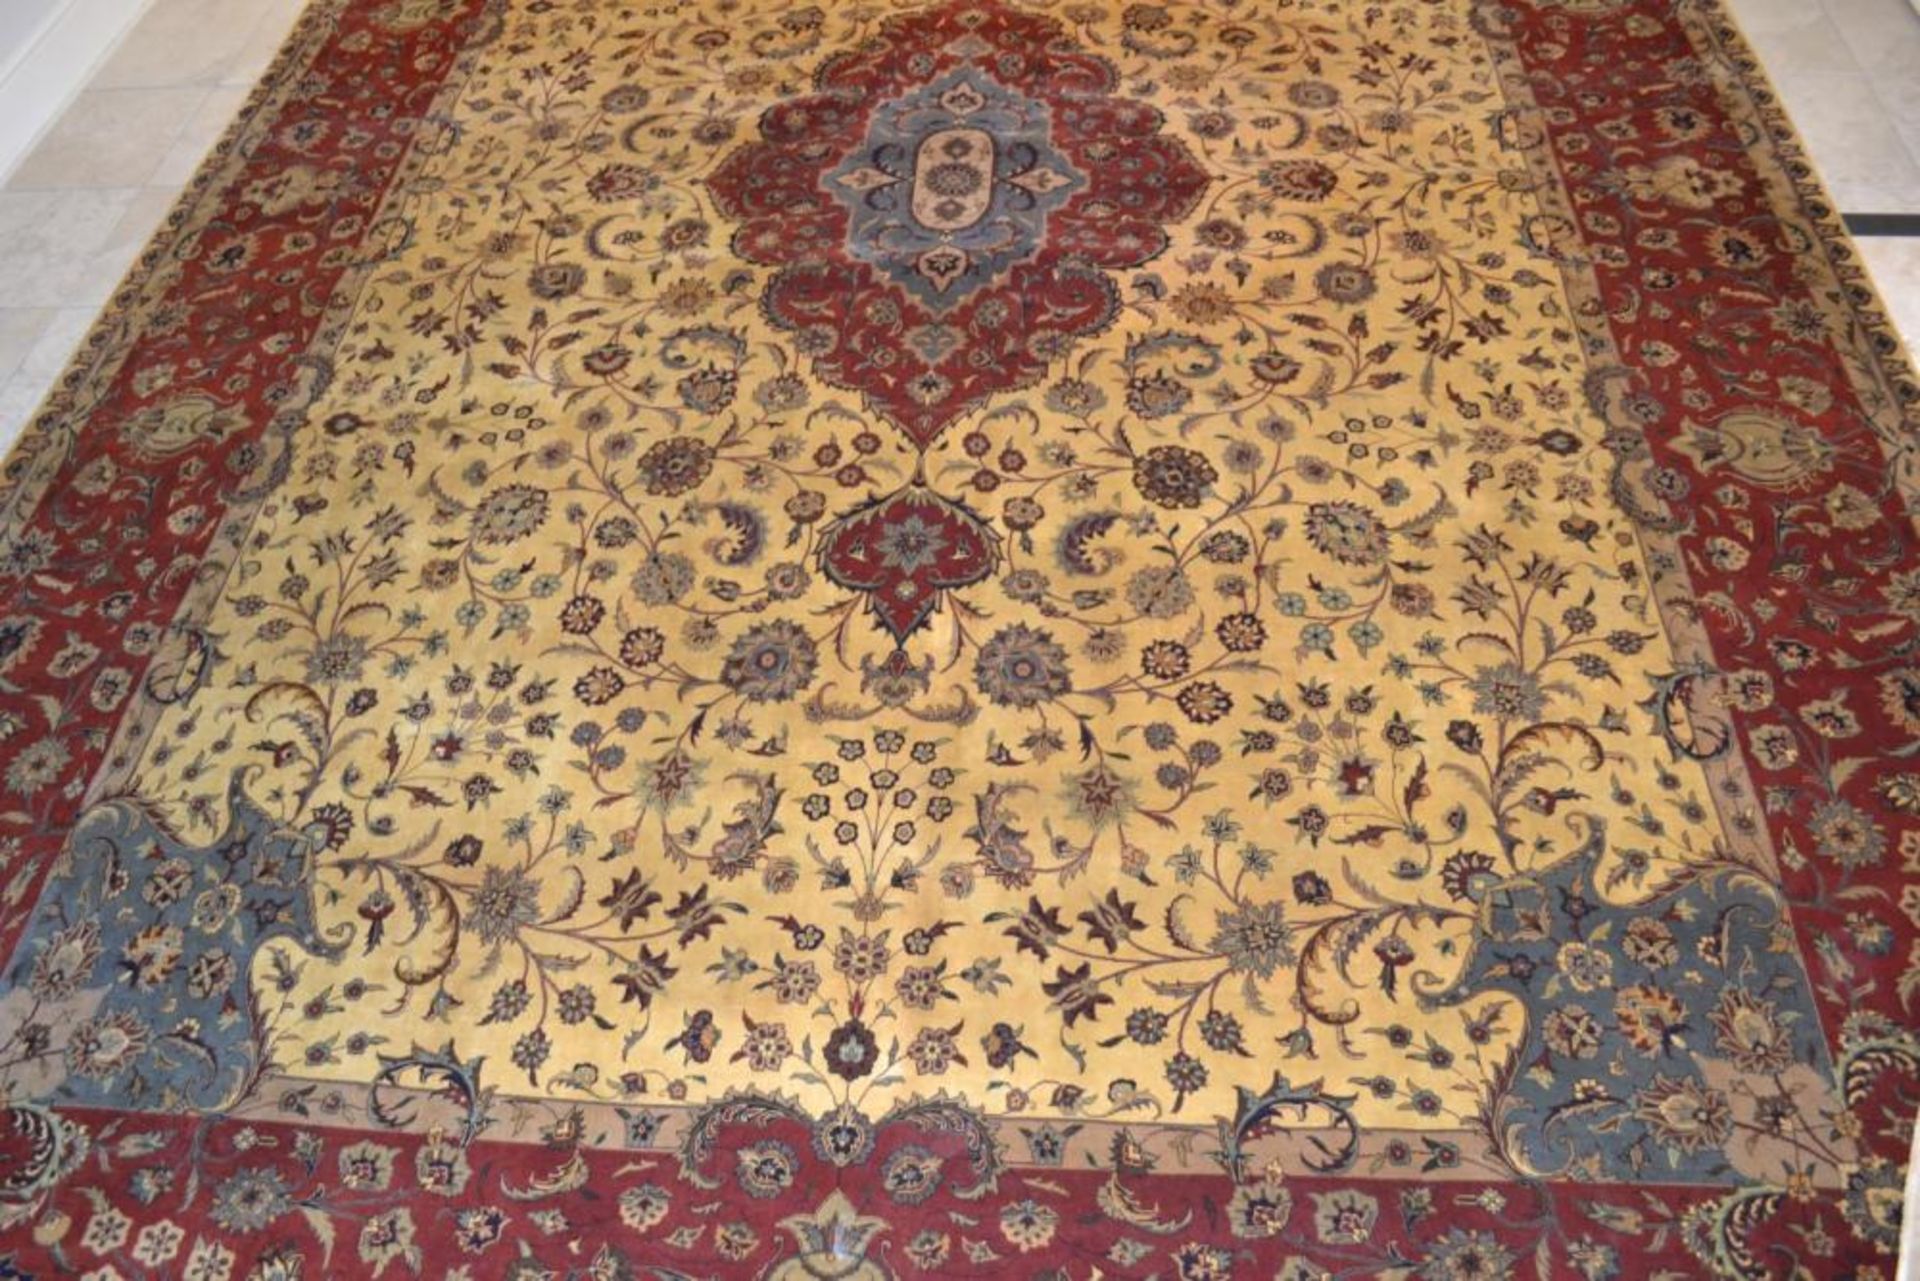 1 x Very Fine Top Quality Pakistan Tabriz Design Carpet - 320 Knot Count - Dimensions: 546x376cm - N - Image 25 of 31